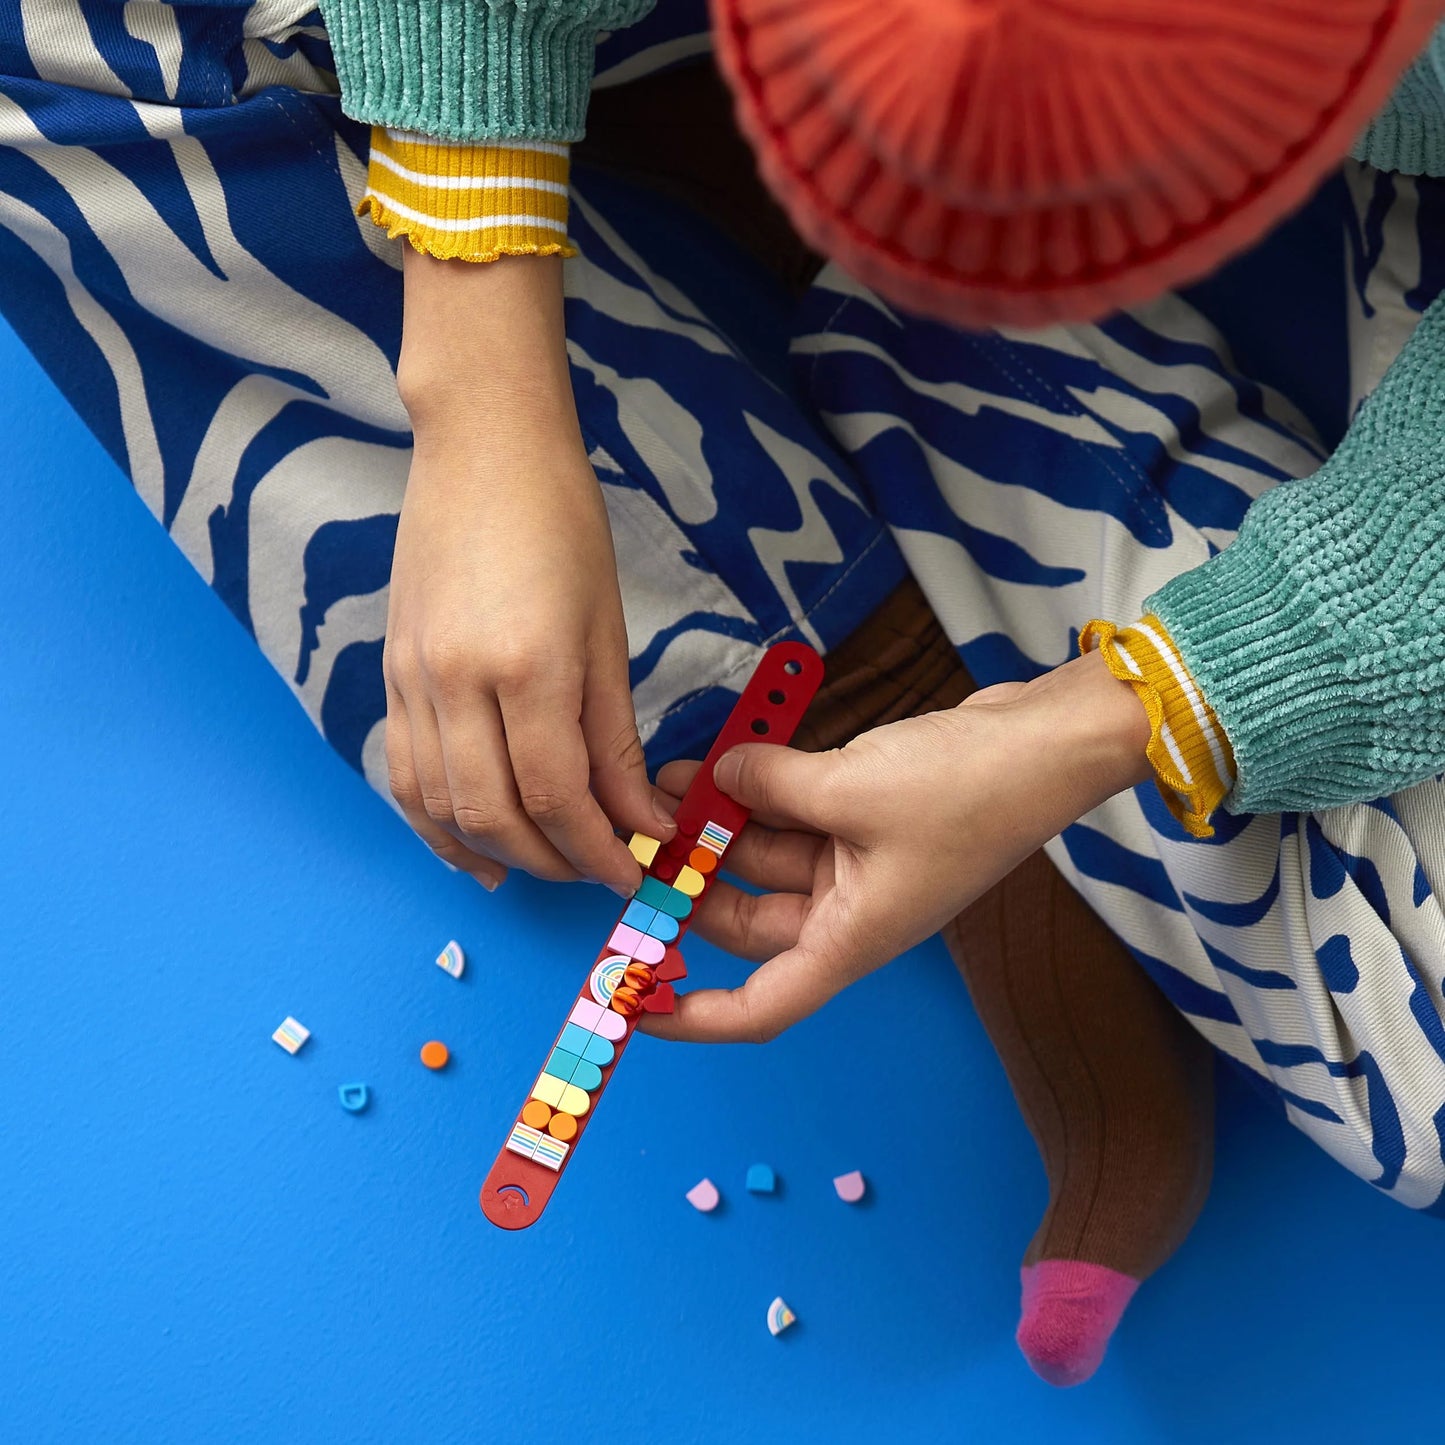 Rainbow bracelet with charms - LEGO Dots